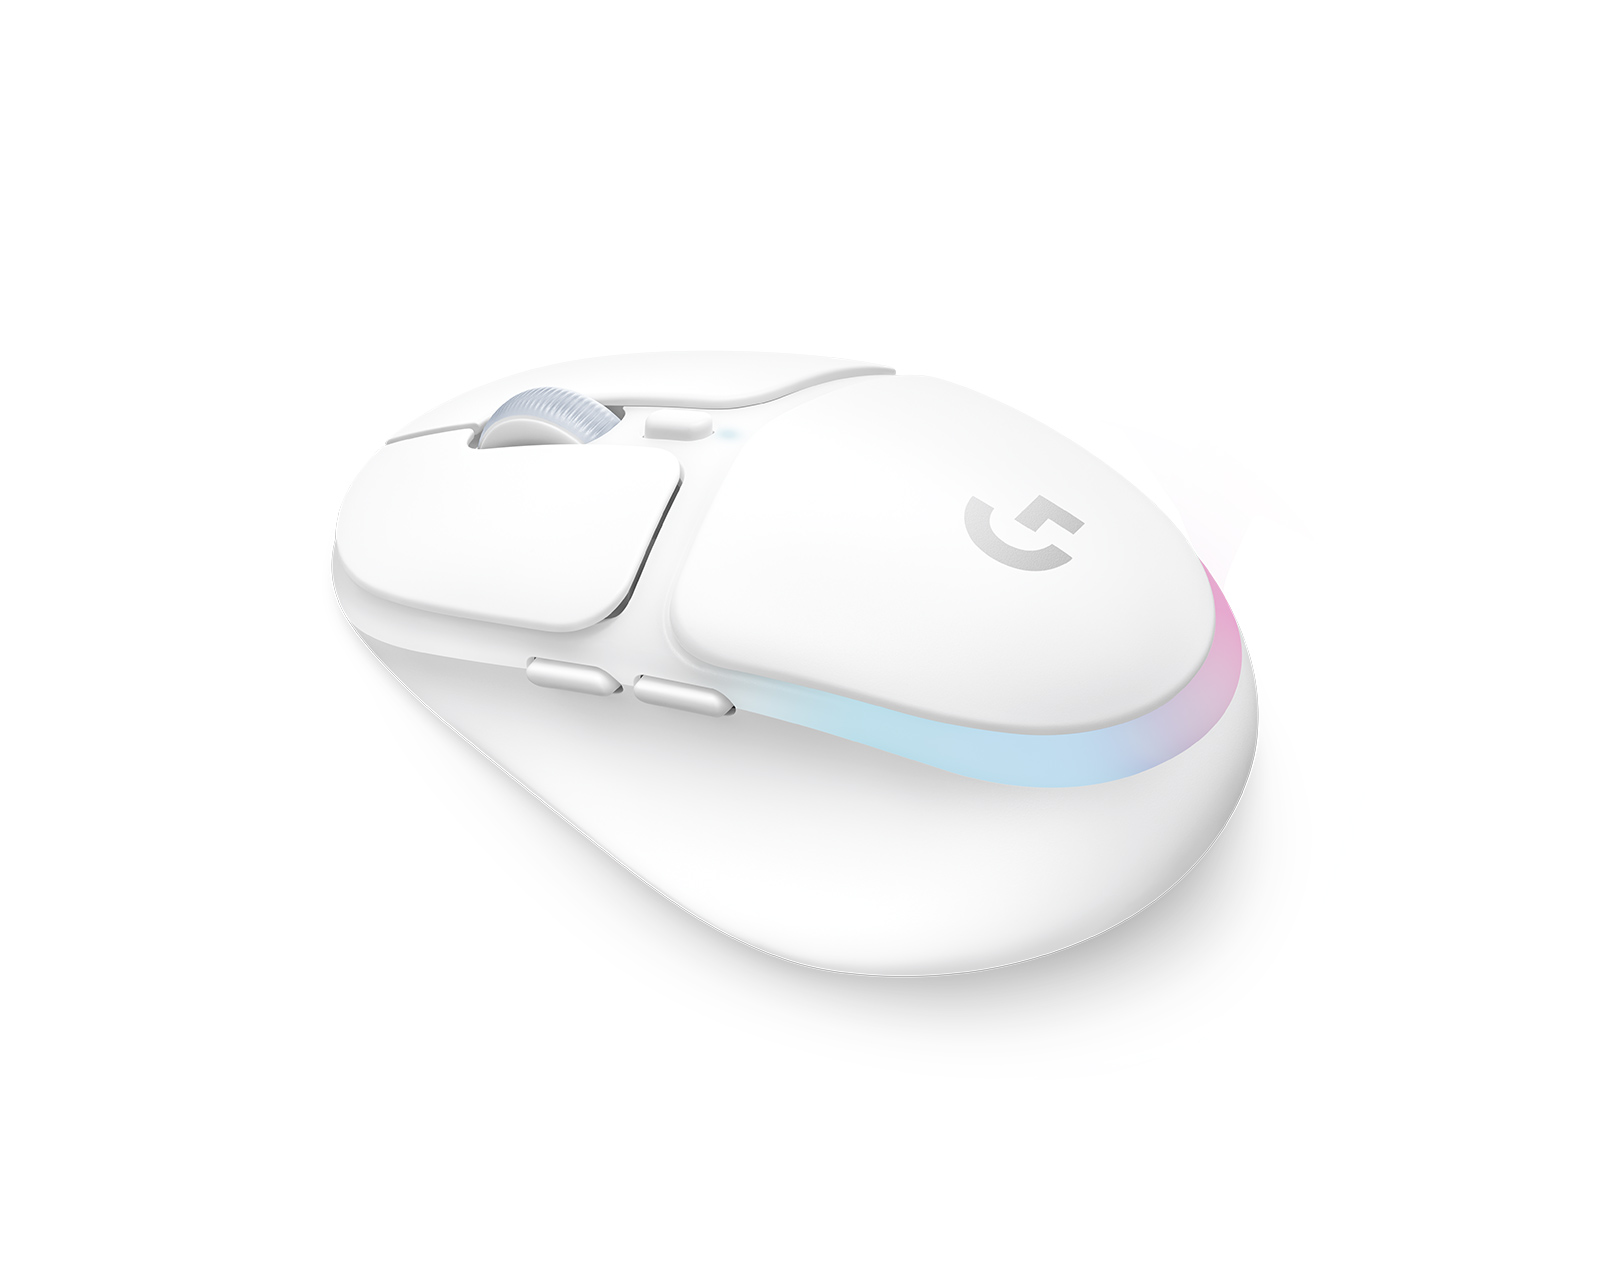 Wireless Off G705 White - Lightspeed Logitech Mouse Gaming